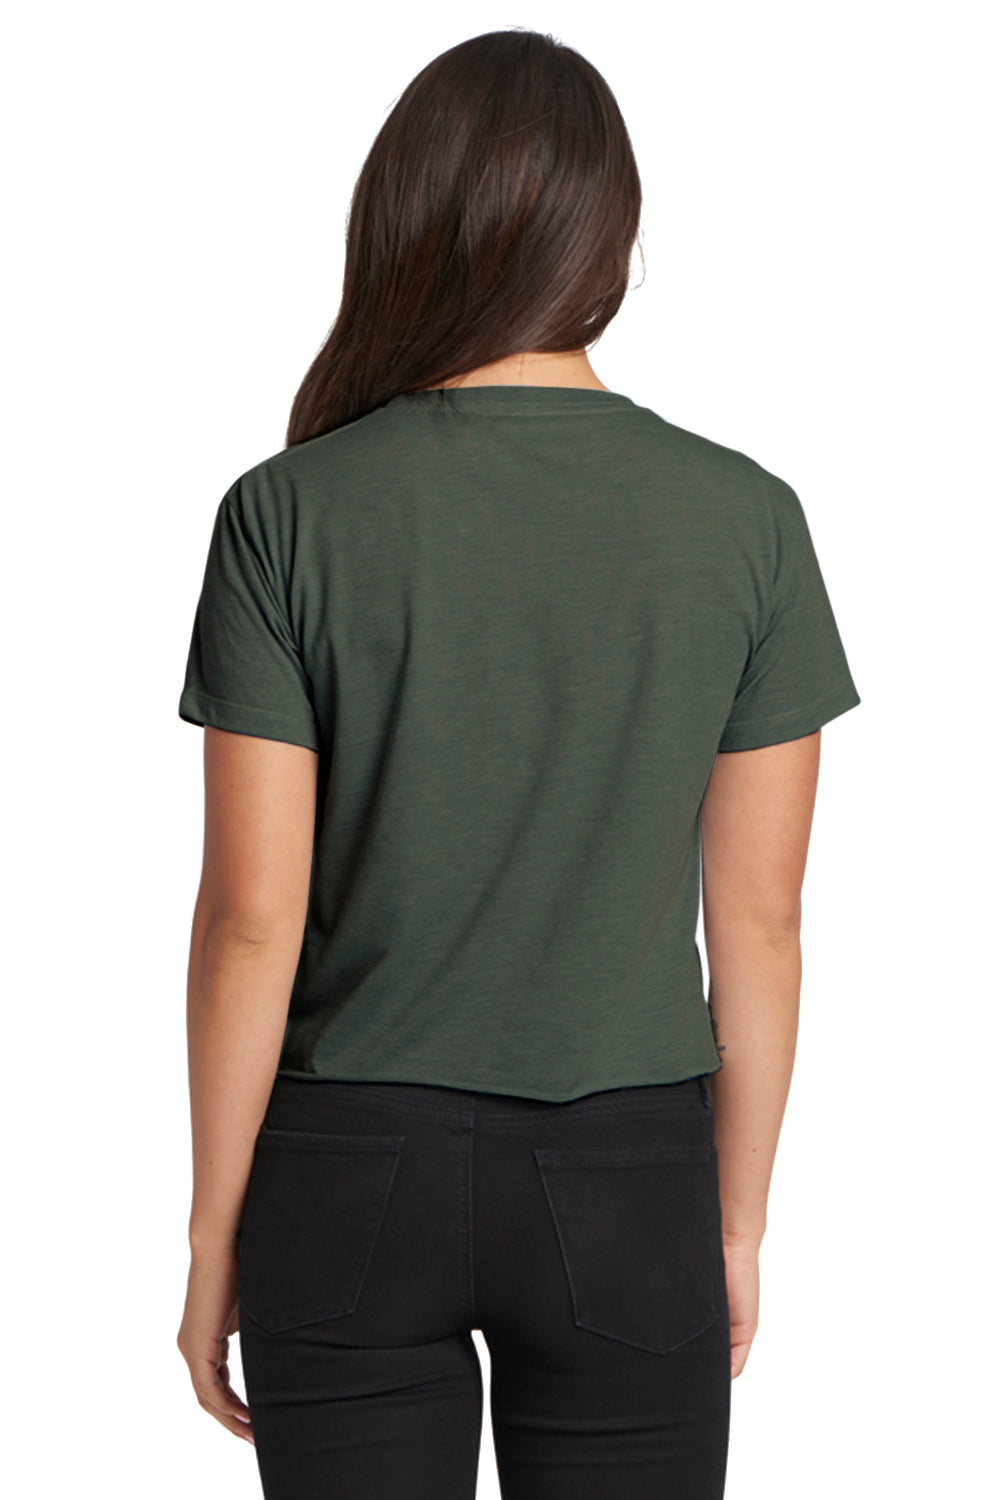 Next Level N5080 Womens Festival Cali Crop Short Sleeve Crewneck T-Shirt Pine Green Back